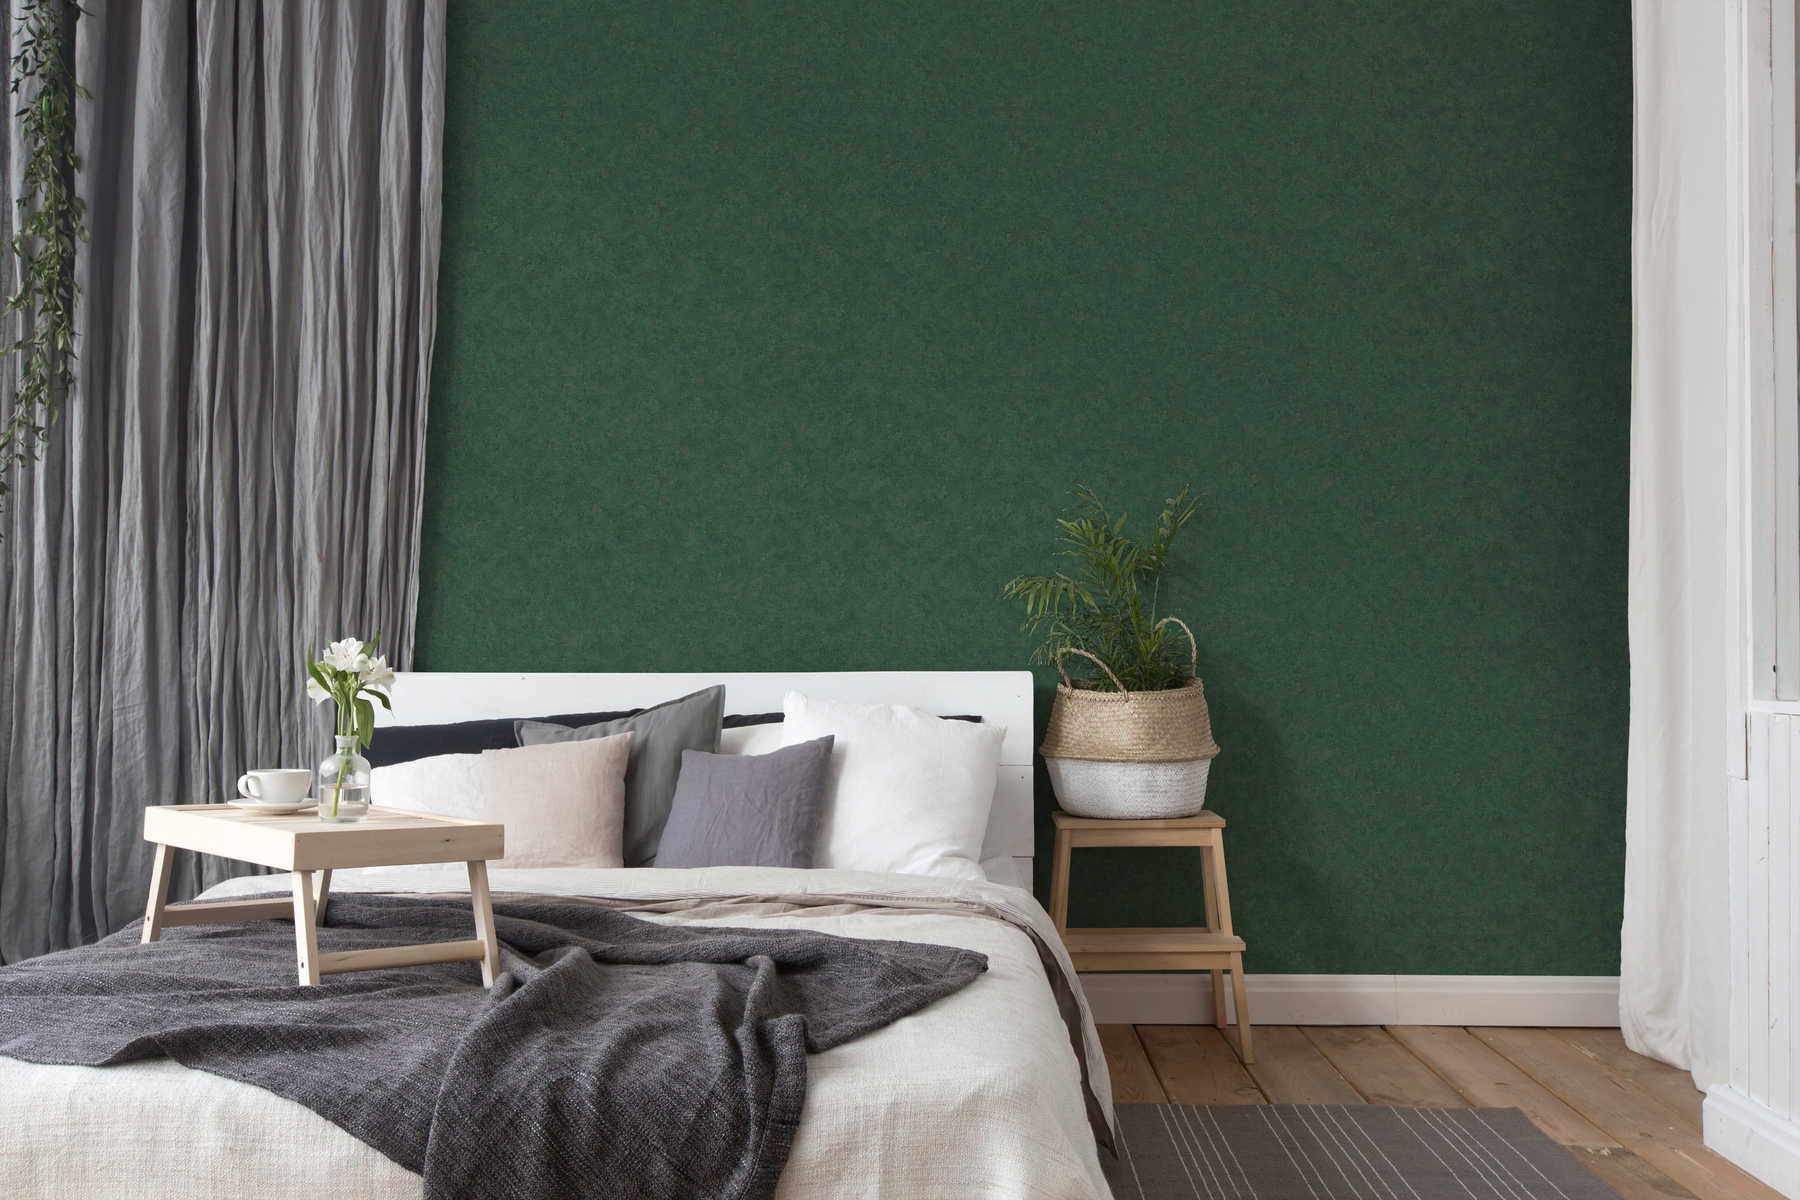             Vliesbehang effen, kleurenpatroon & vintage look - groen
        